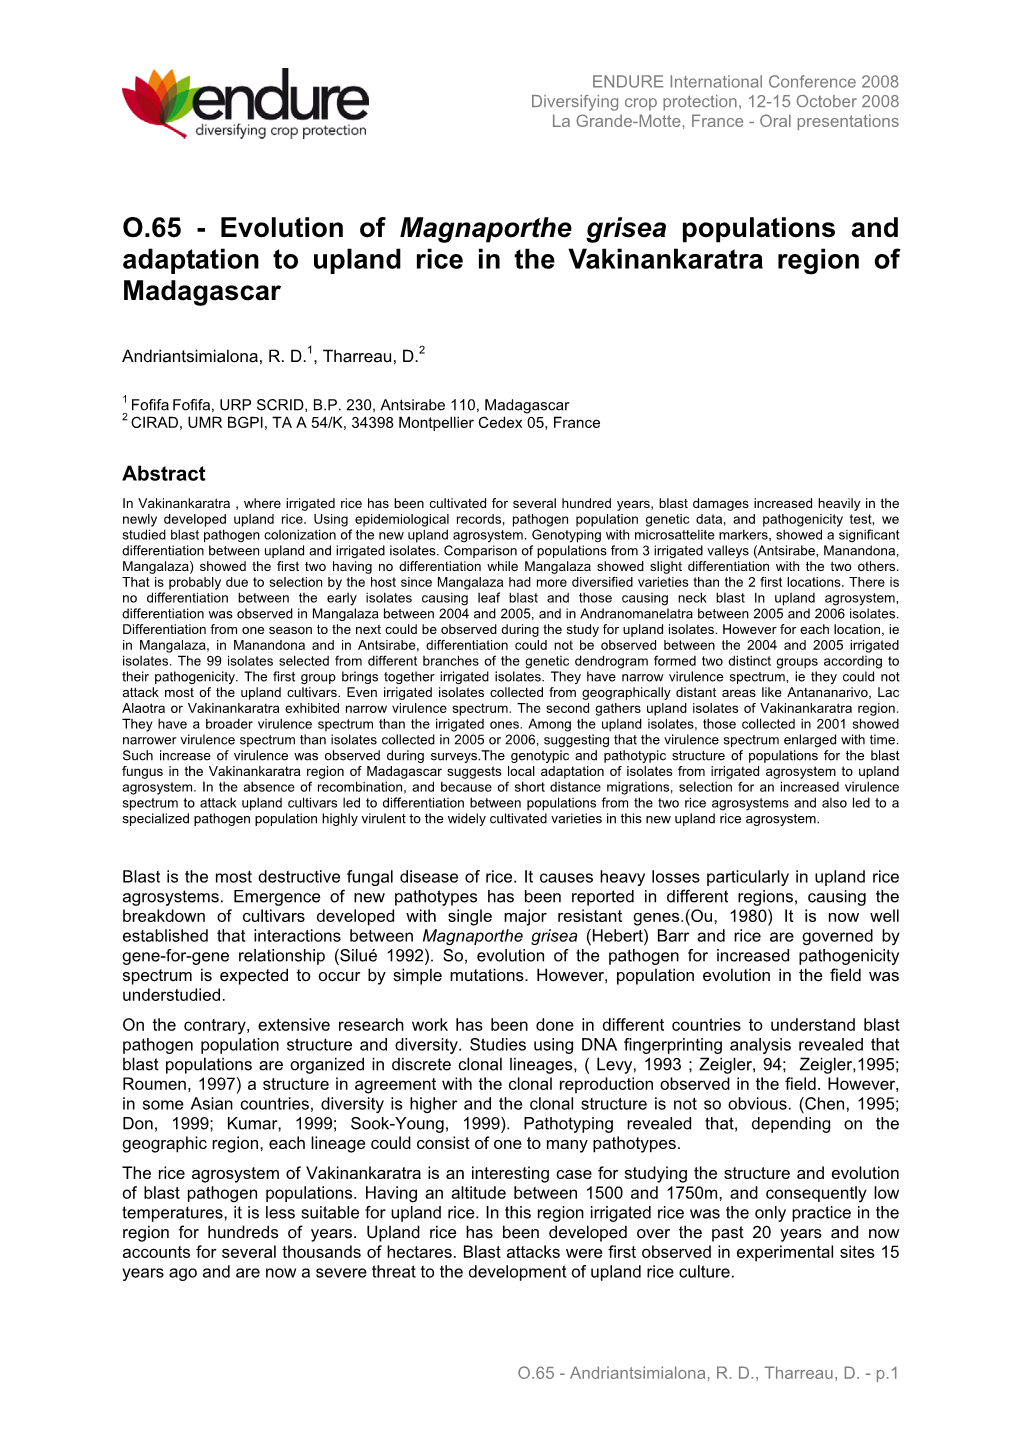 Adaptation and Evolution of Magnaporthe Grisea Population